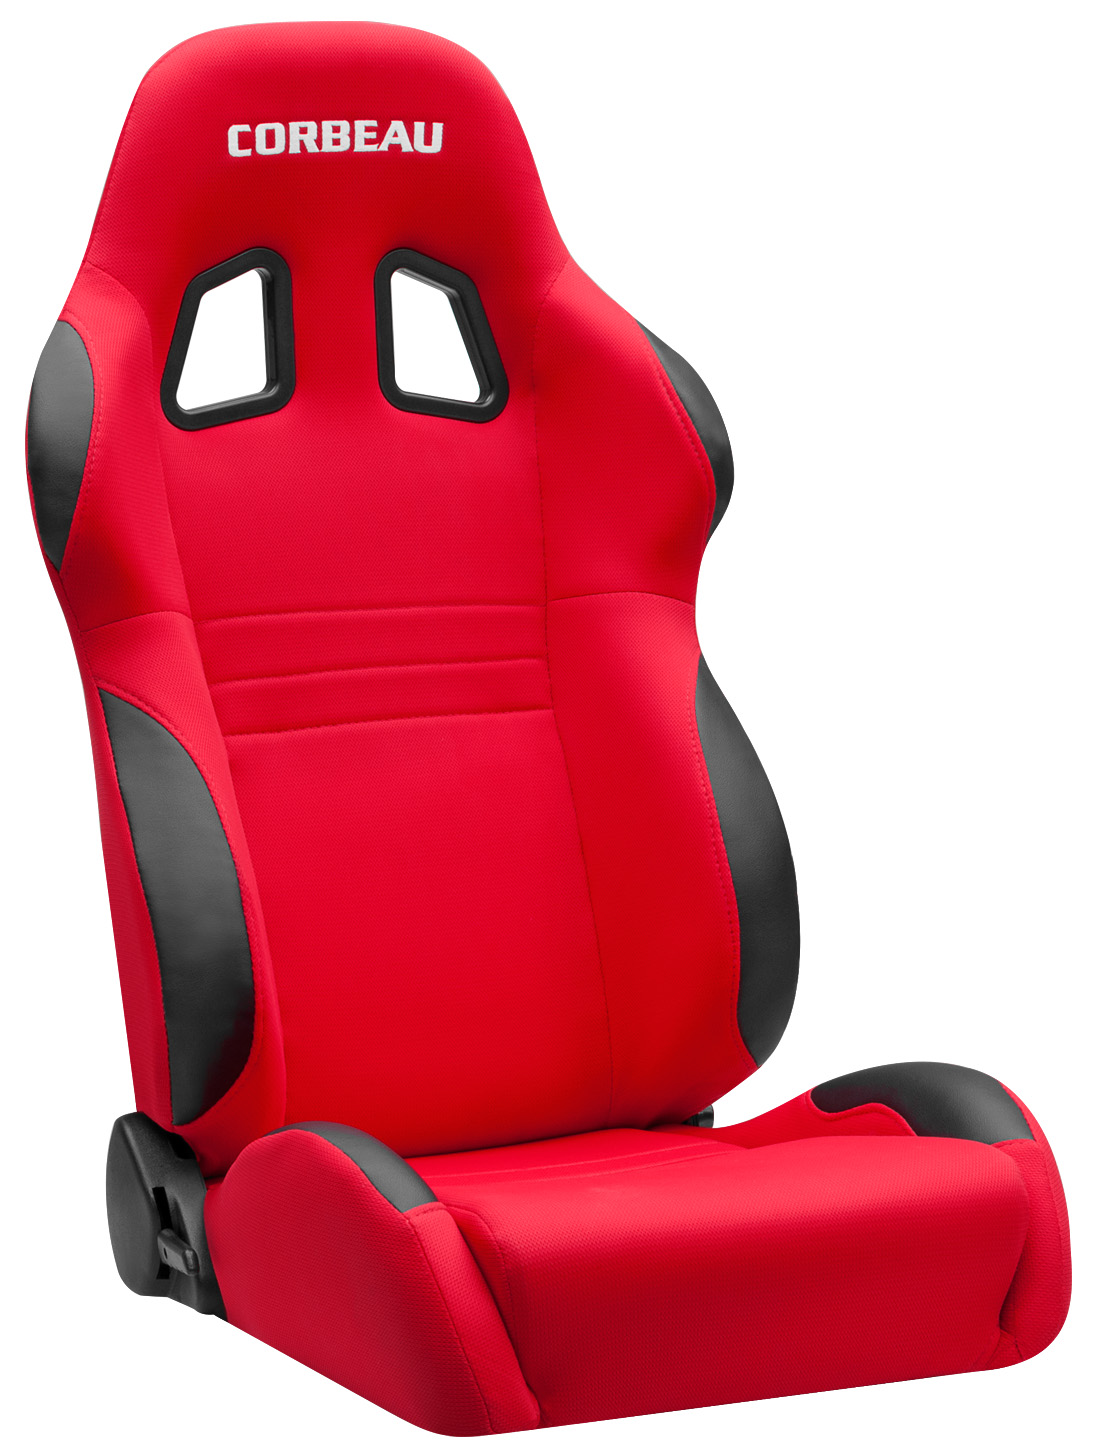 Corbeau A4 Racing Seat, Red Cloth, 60097PR